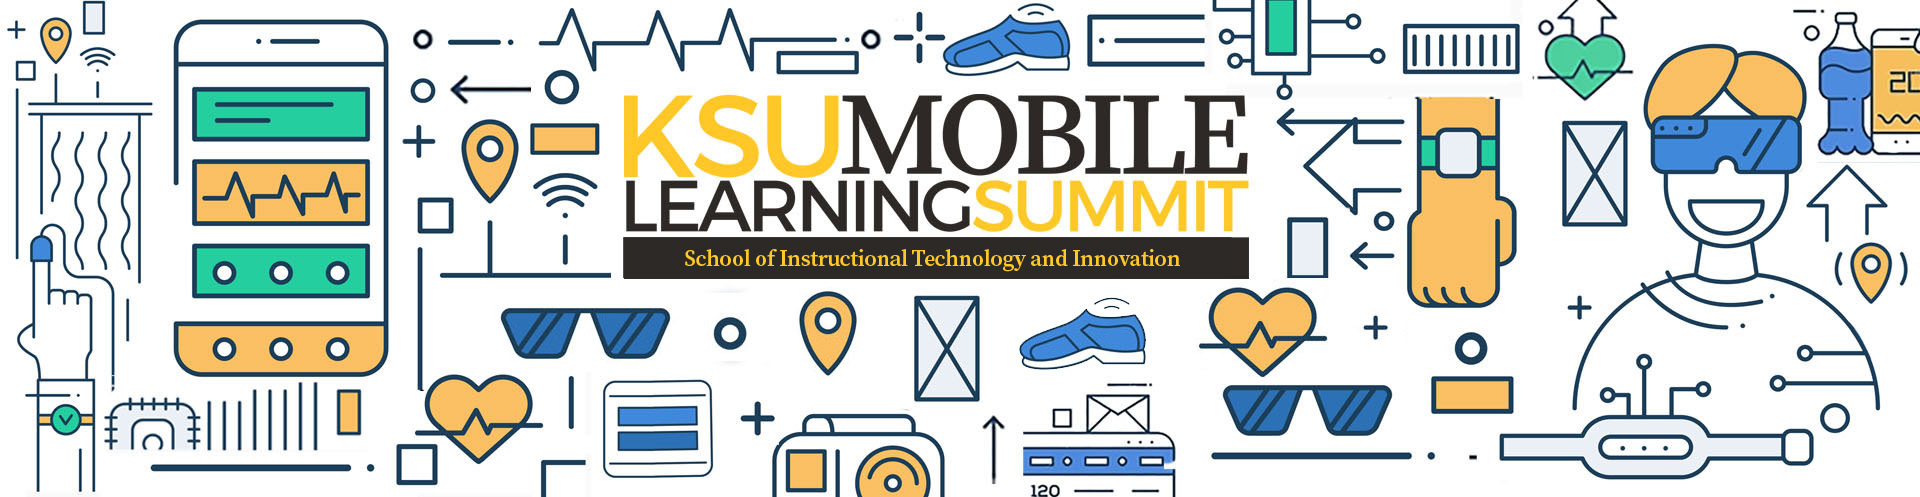 KSU Mobile Learning Summit Banner